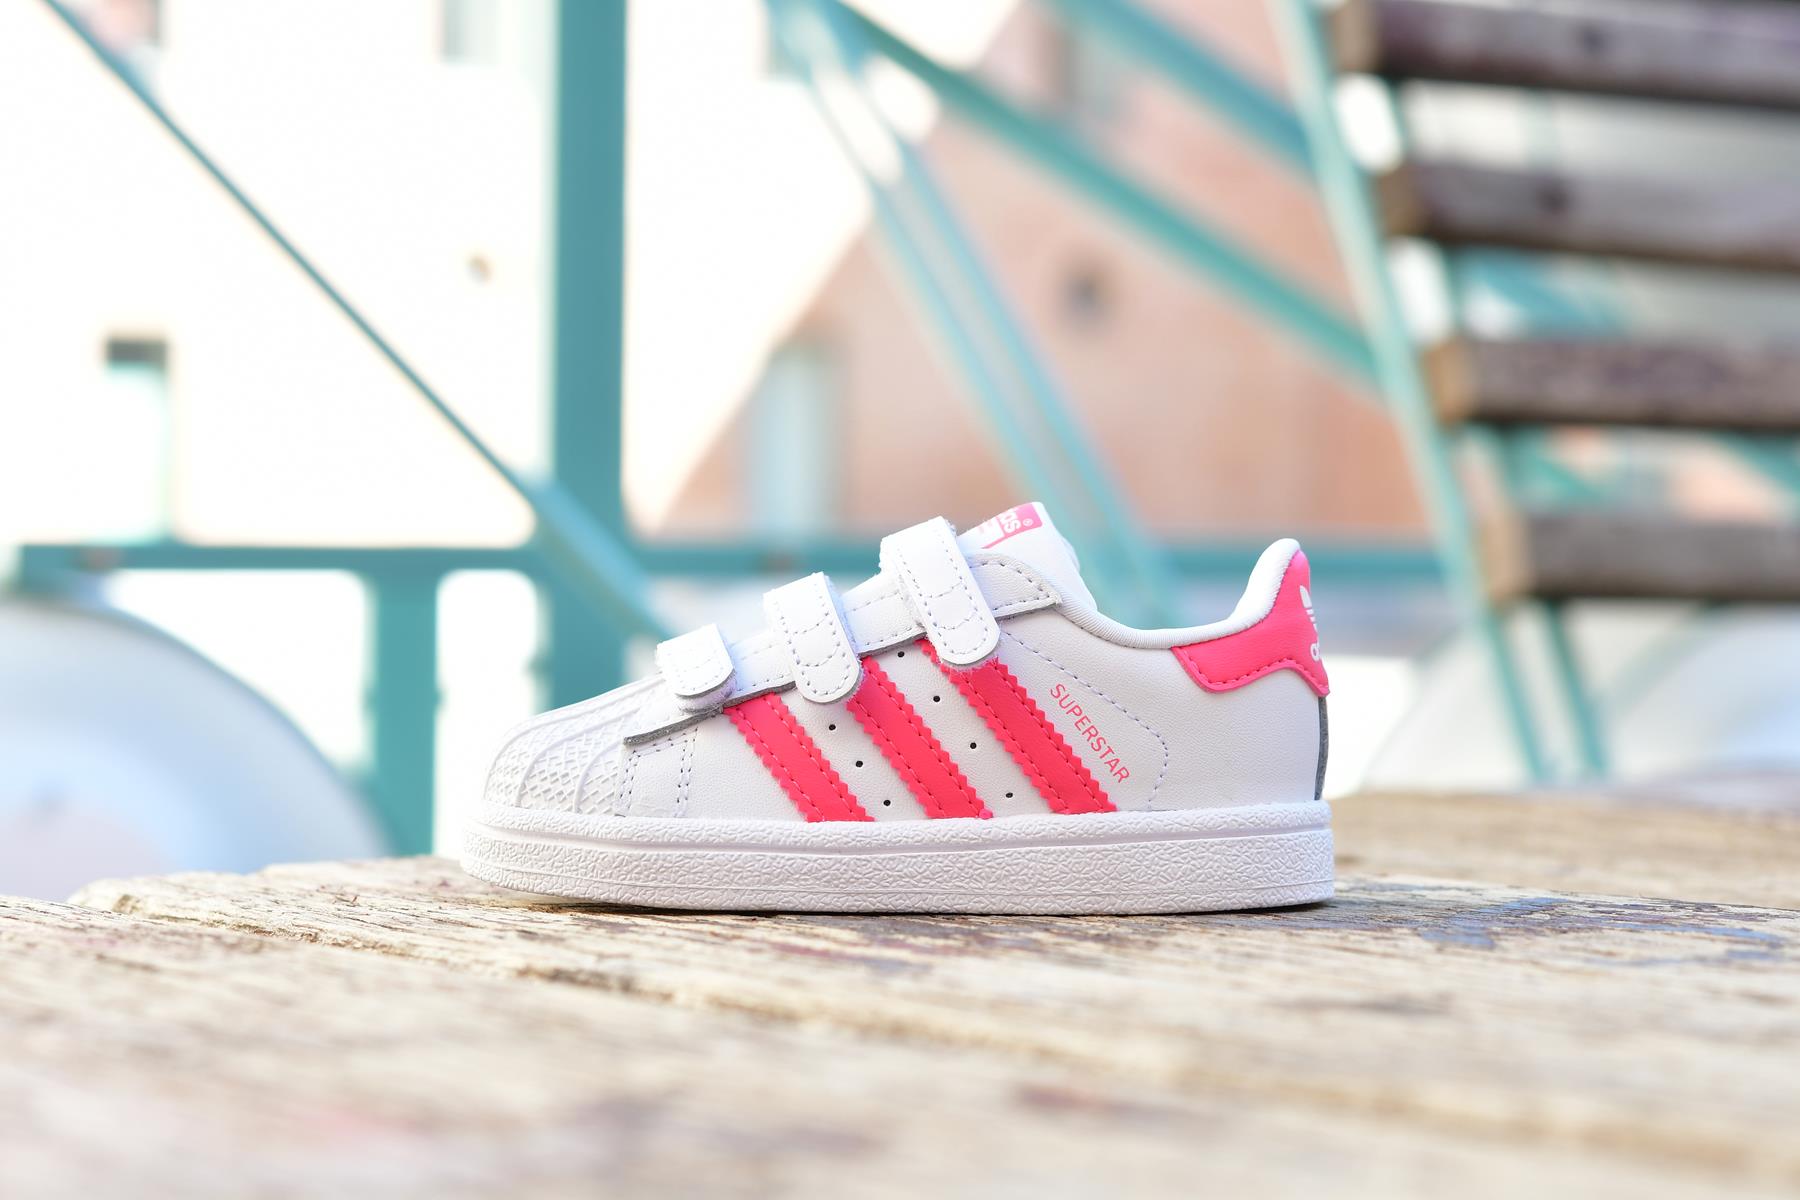 CG6638_AmorShoes-Adidas-Originals-Superstar-CF-I-Cloud-White-Real-Pink-zapatilla-velcro-piel-niña-Blanca-rayas-rosa-CG6638